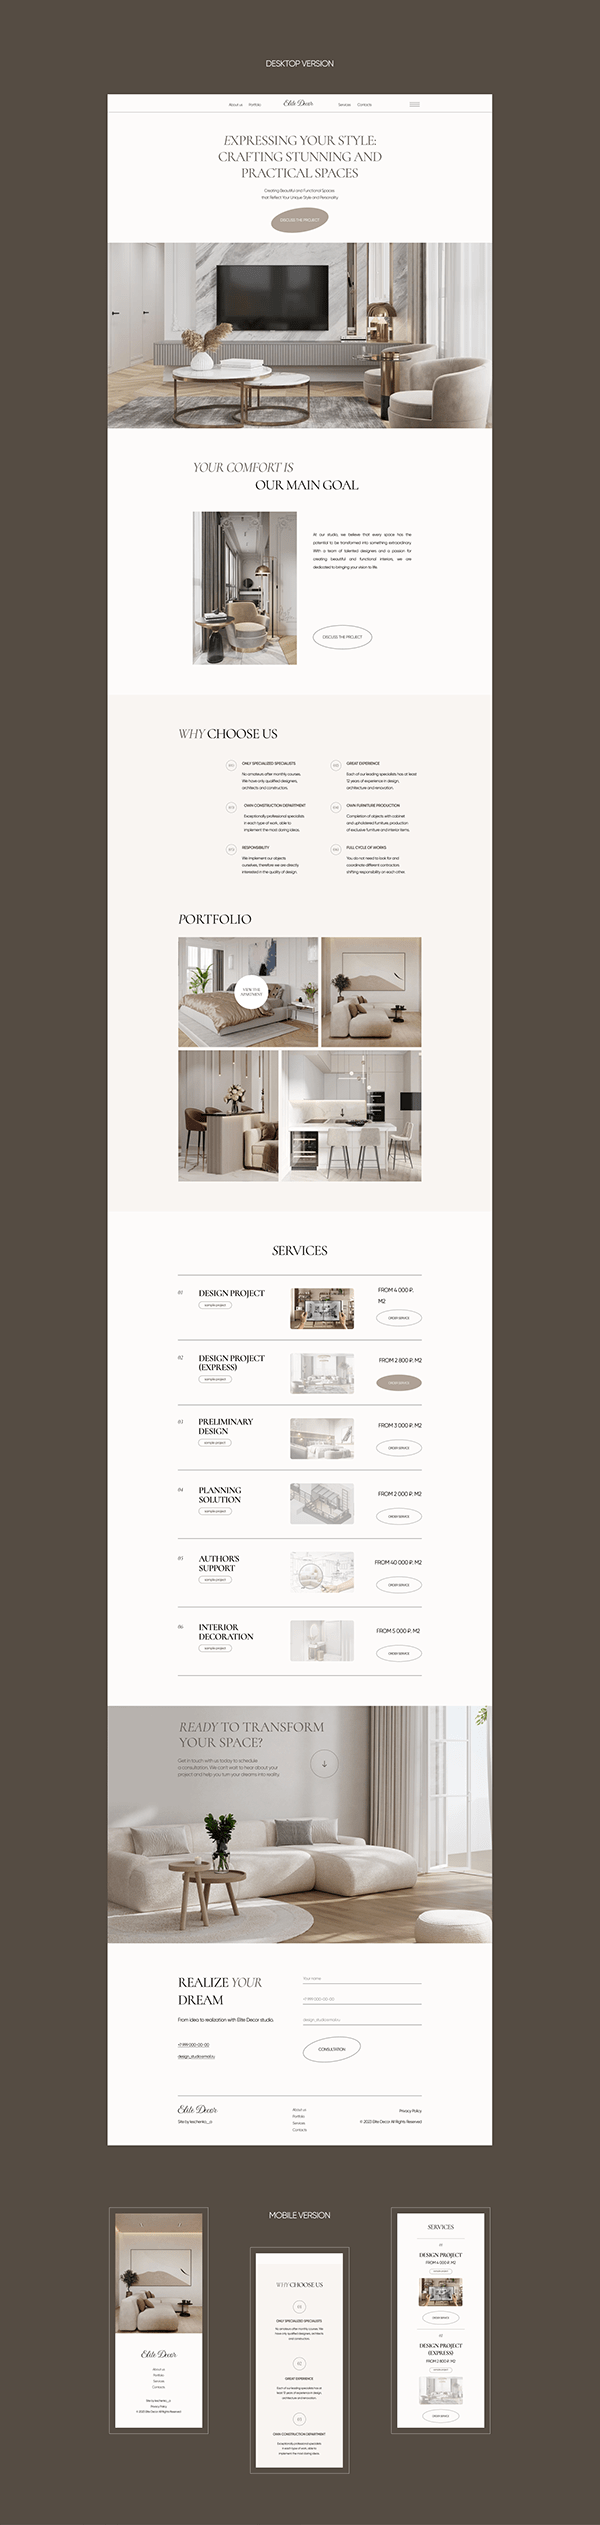 Landing page for Interior Design Studio | Website